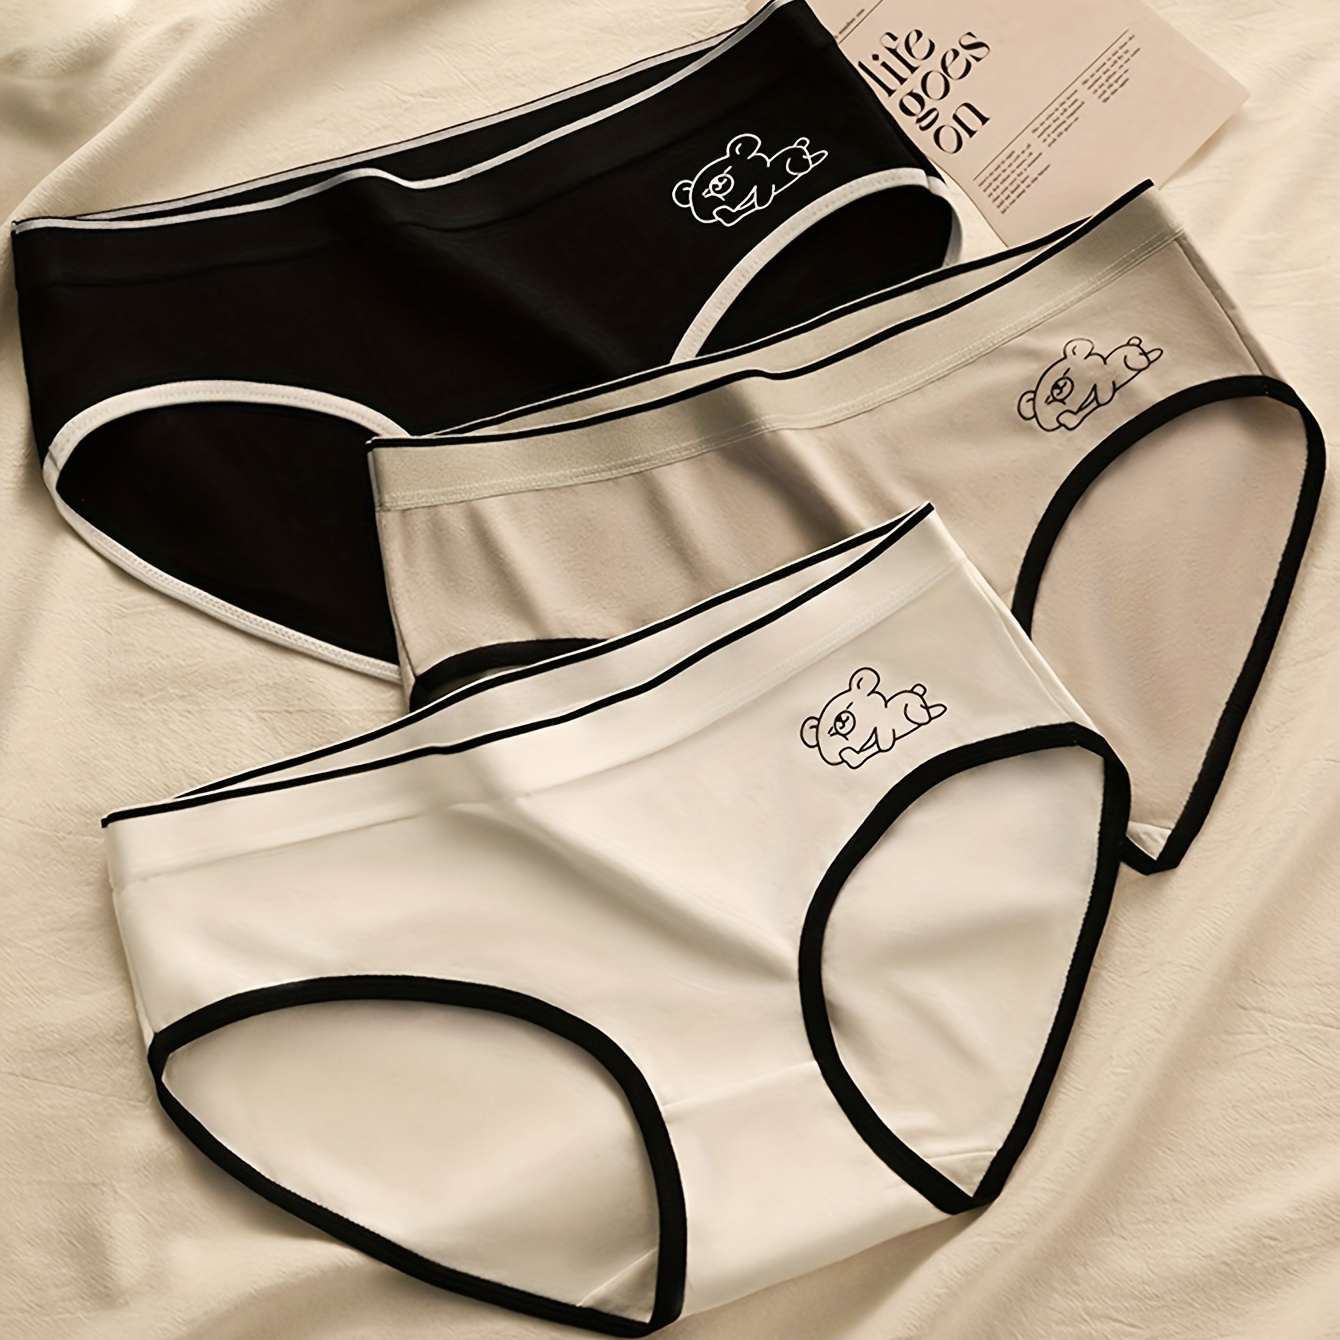 

3pcs Contrast Trim Seamless Print Briefs, Cute Comfy Breathable Stretchy Intimates Panties, Women's Lingerie & Underwear